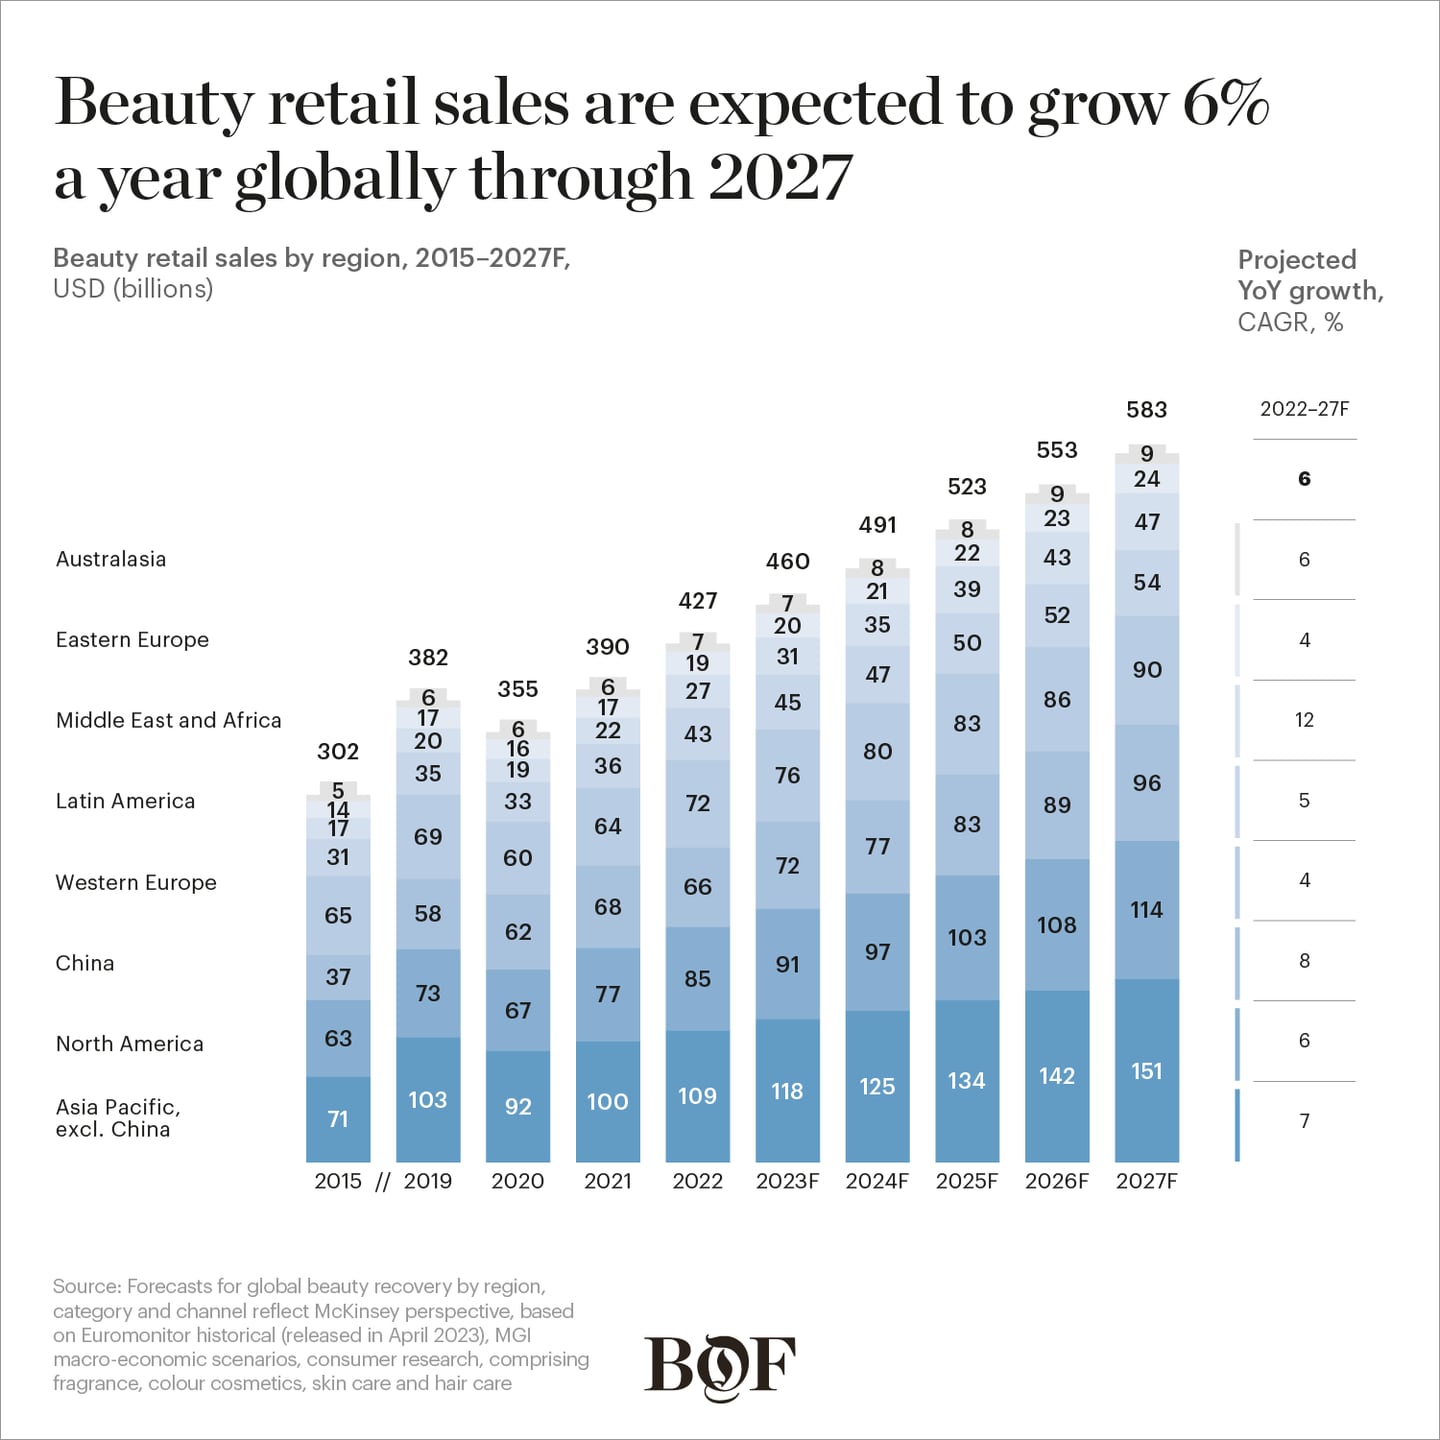 Beauty retail sales through 2027